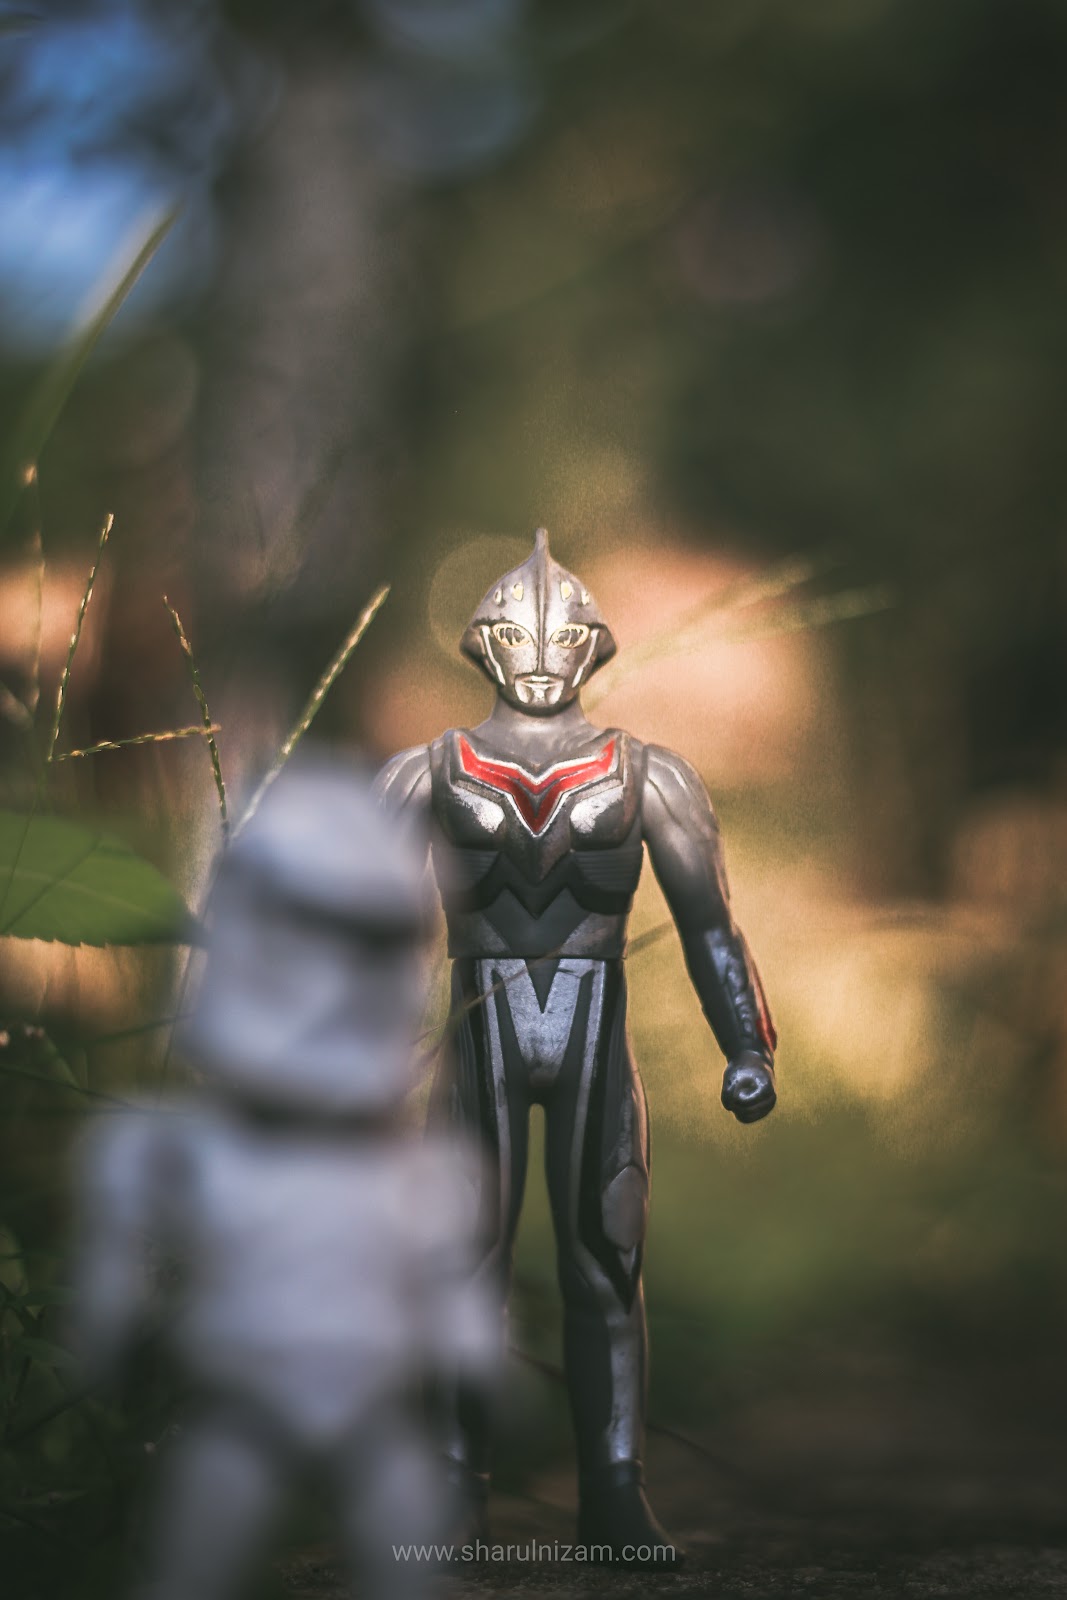 Starwars Clone Trooper (Toy Photography)